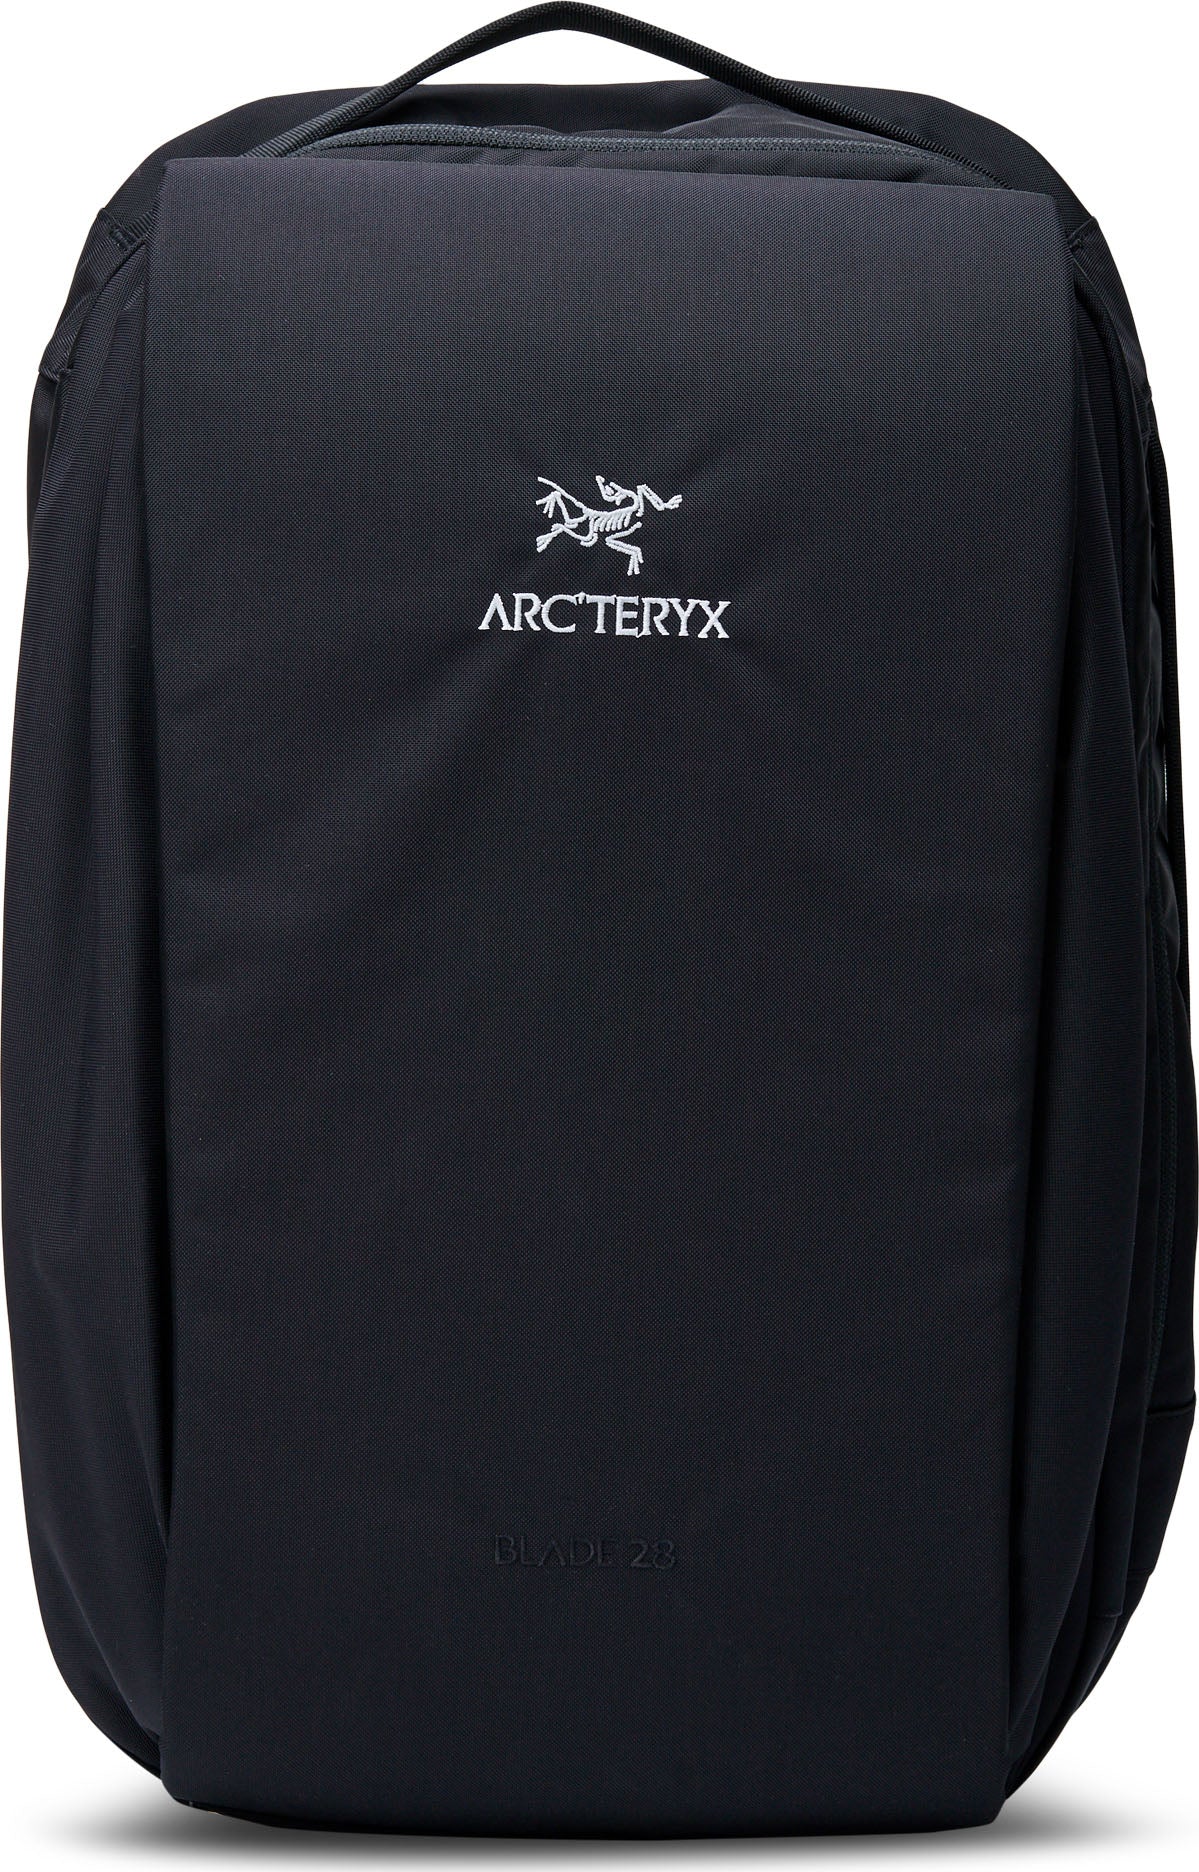 Arc'teryx Blade 28 Backpack